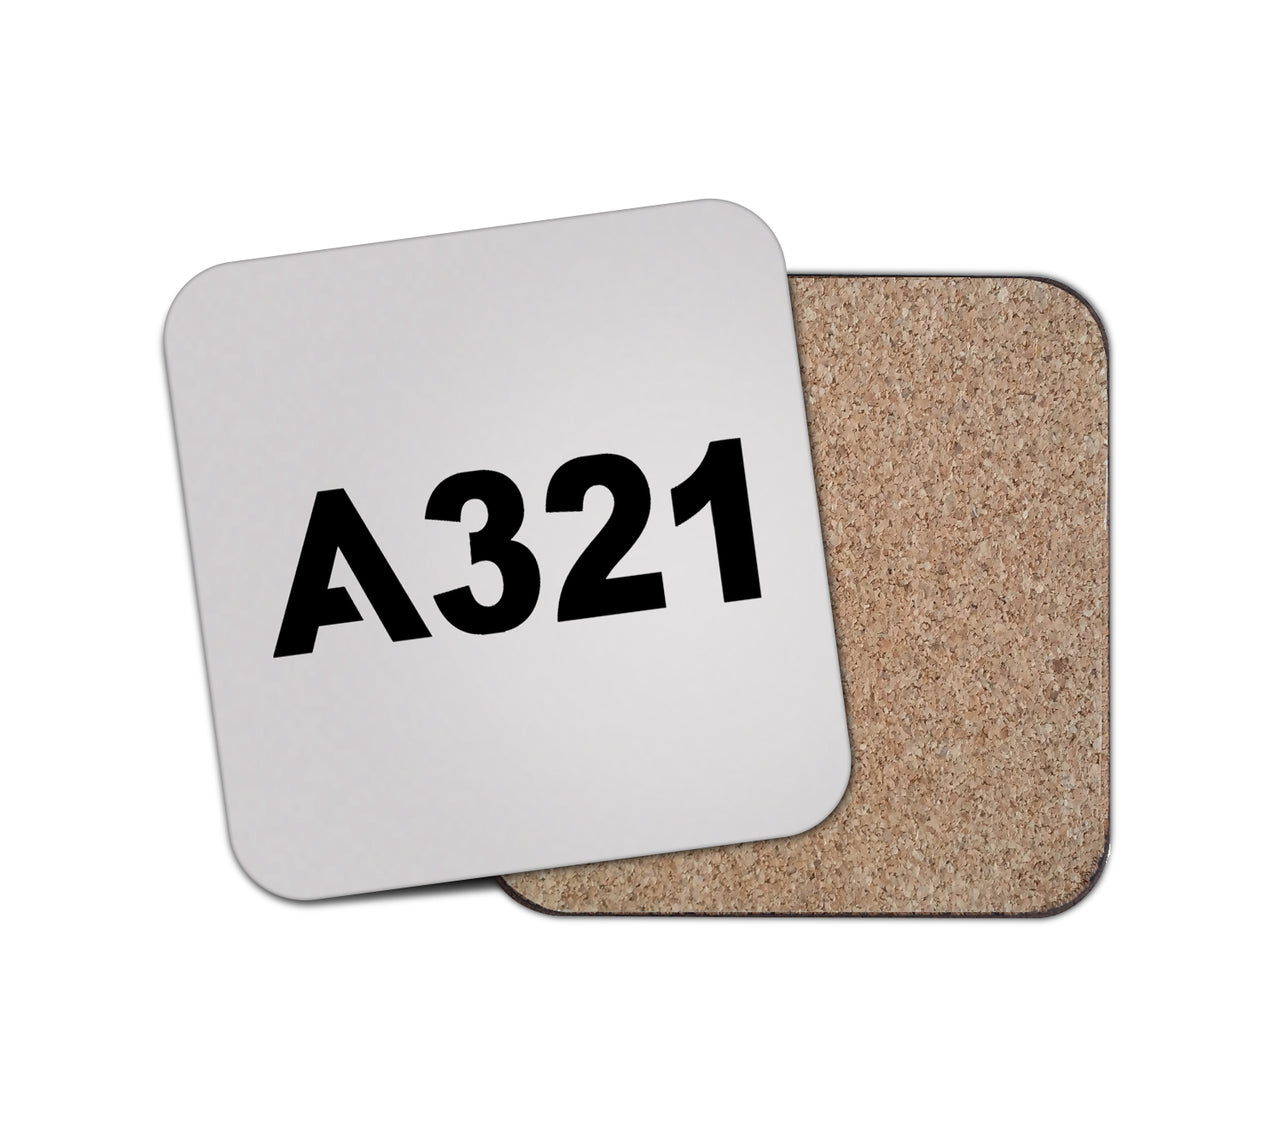 A321 Flat Text Designed Coasters